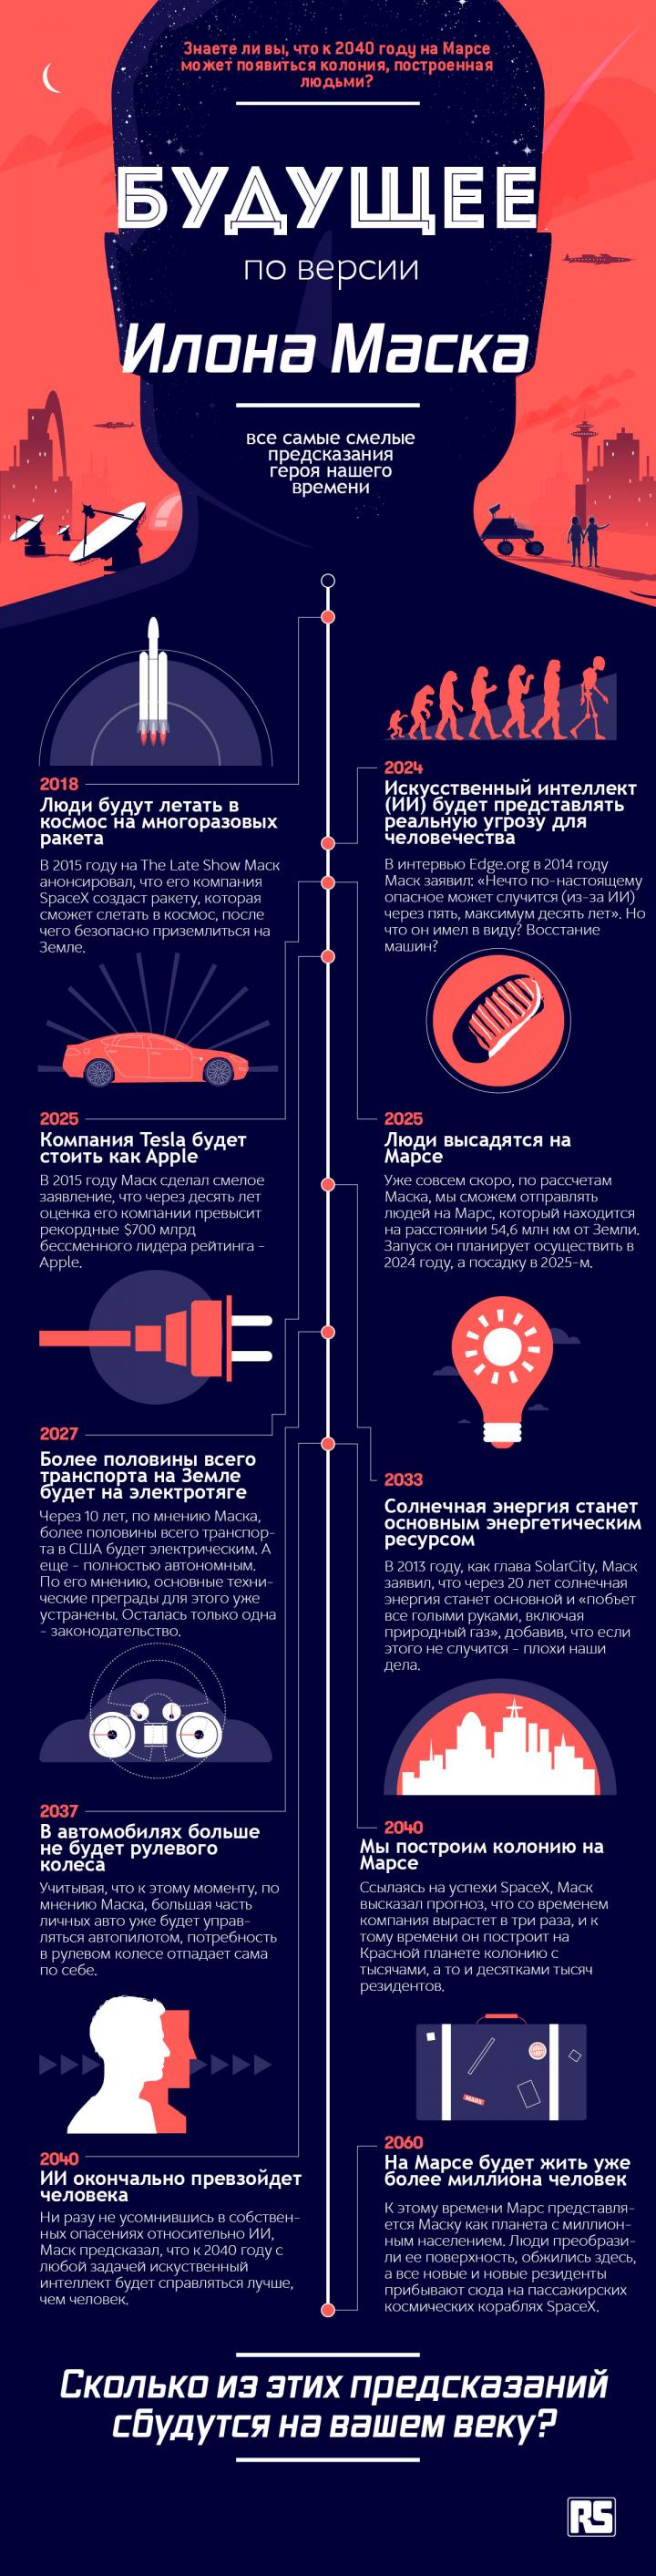 Каким будет 2040 год на Земле по версии Илона Маска (инфографика)